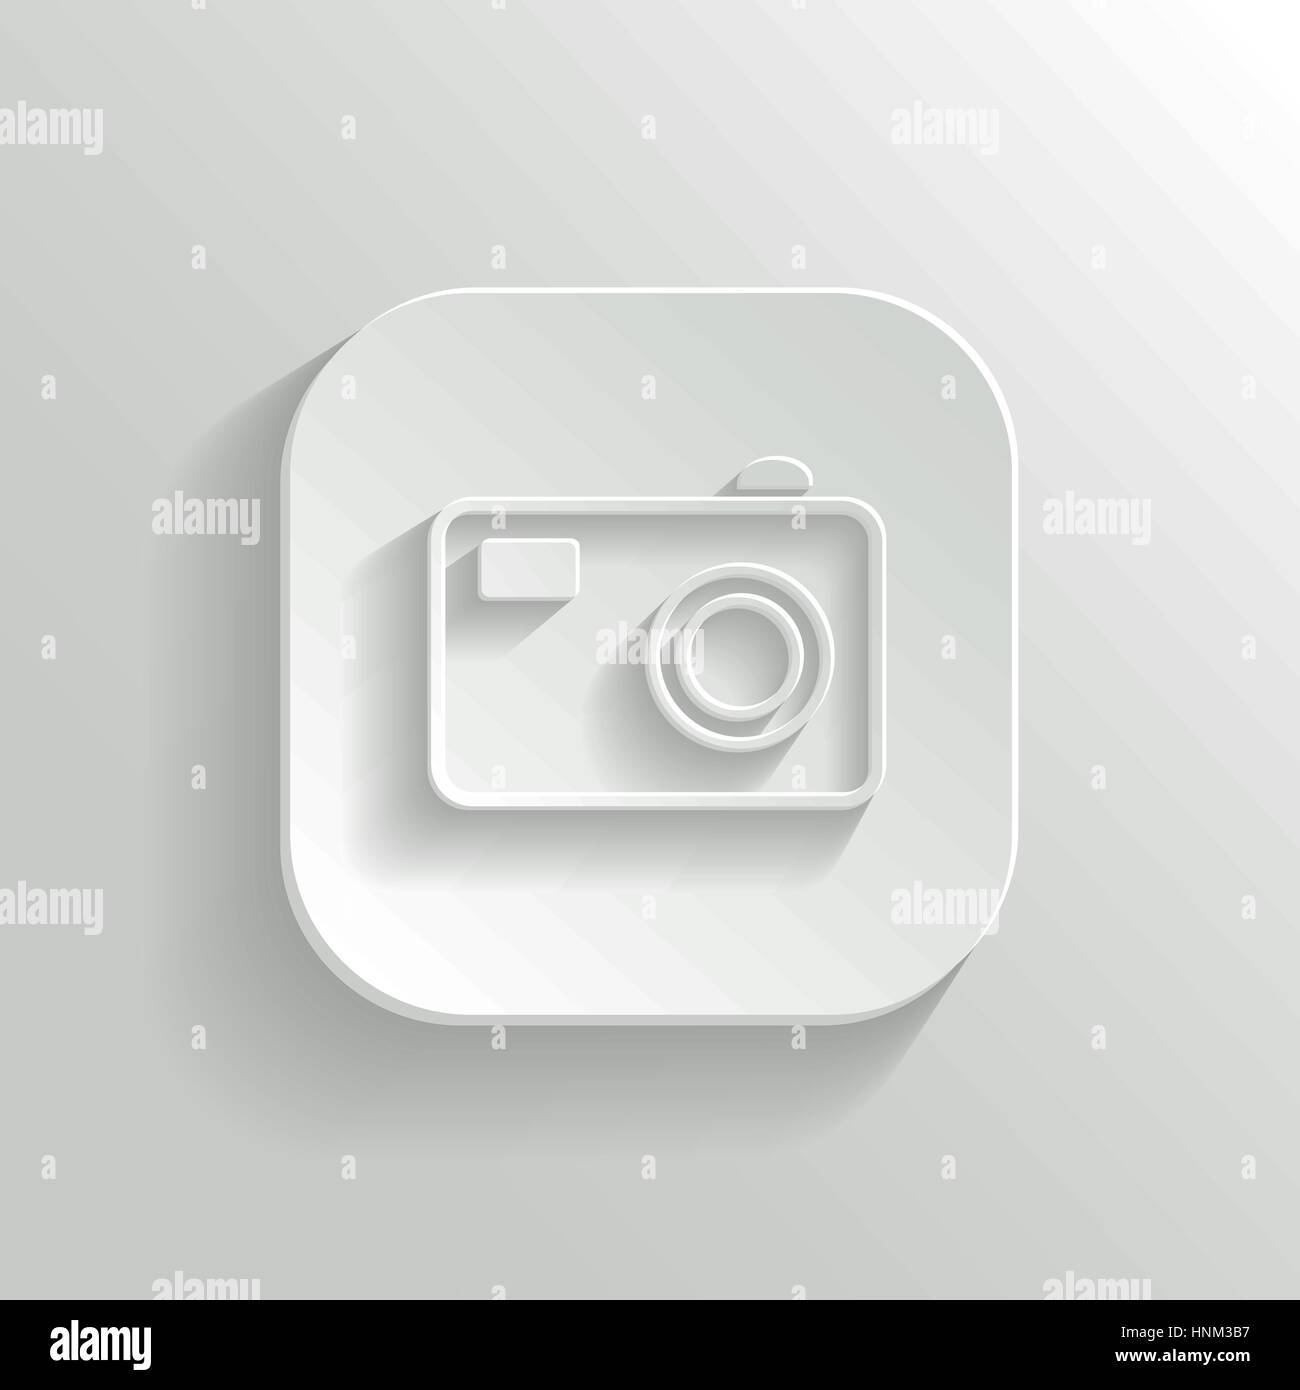 Camera icon - vector white app button with shadow Stock Vector